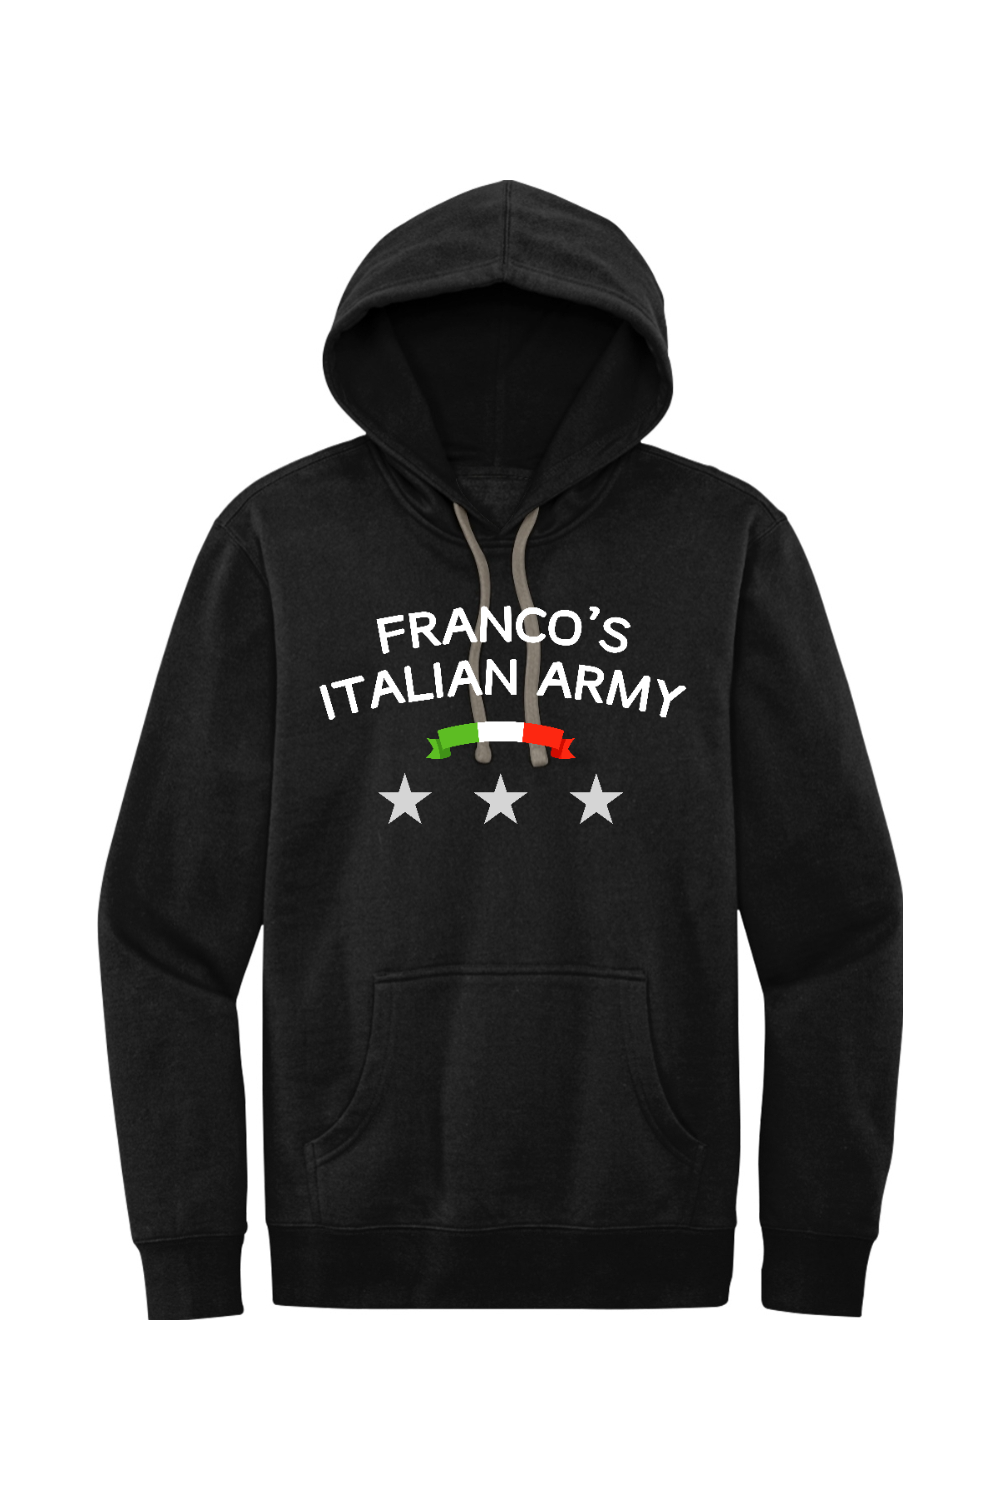 Franco's Italian Army - Fleece Hoodie - Yinzylvania